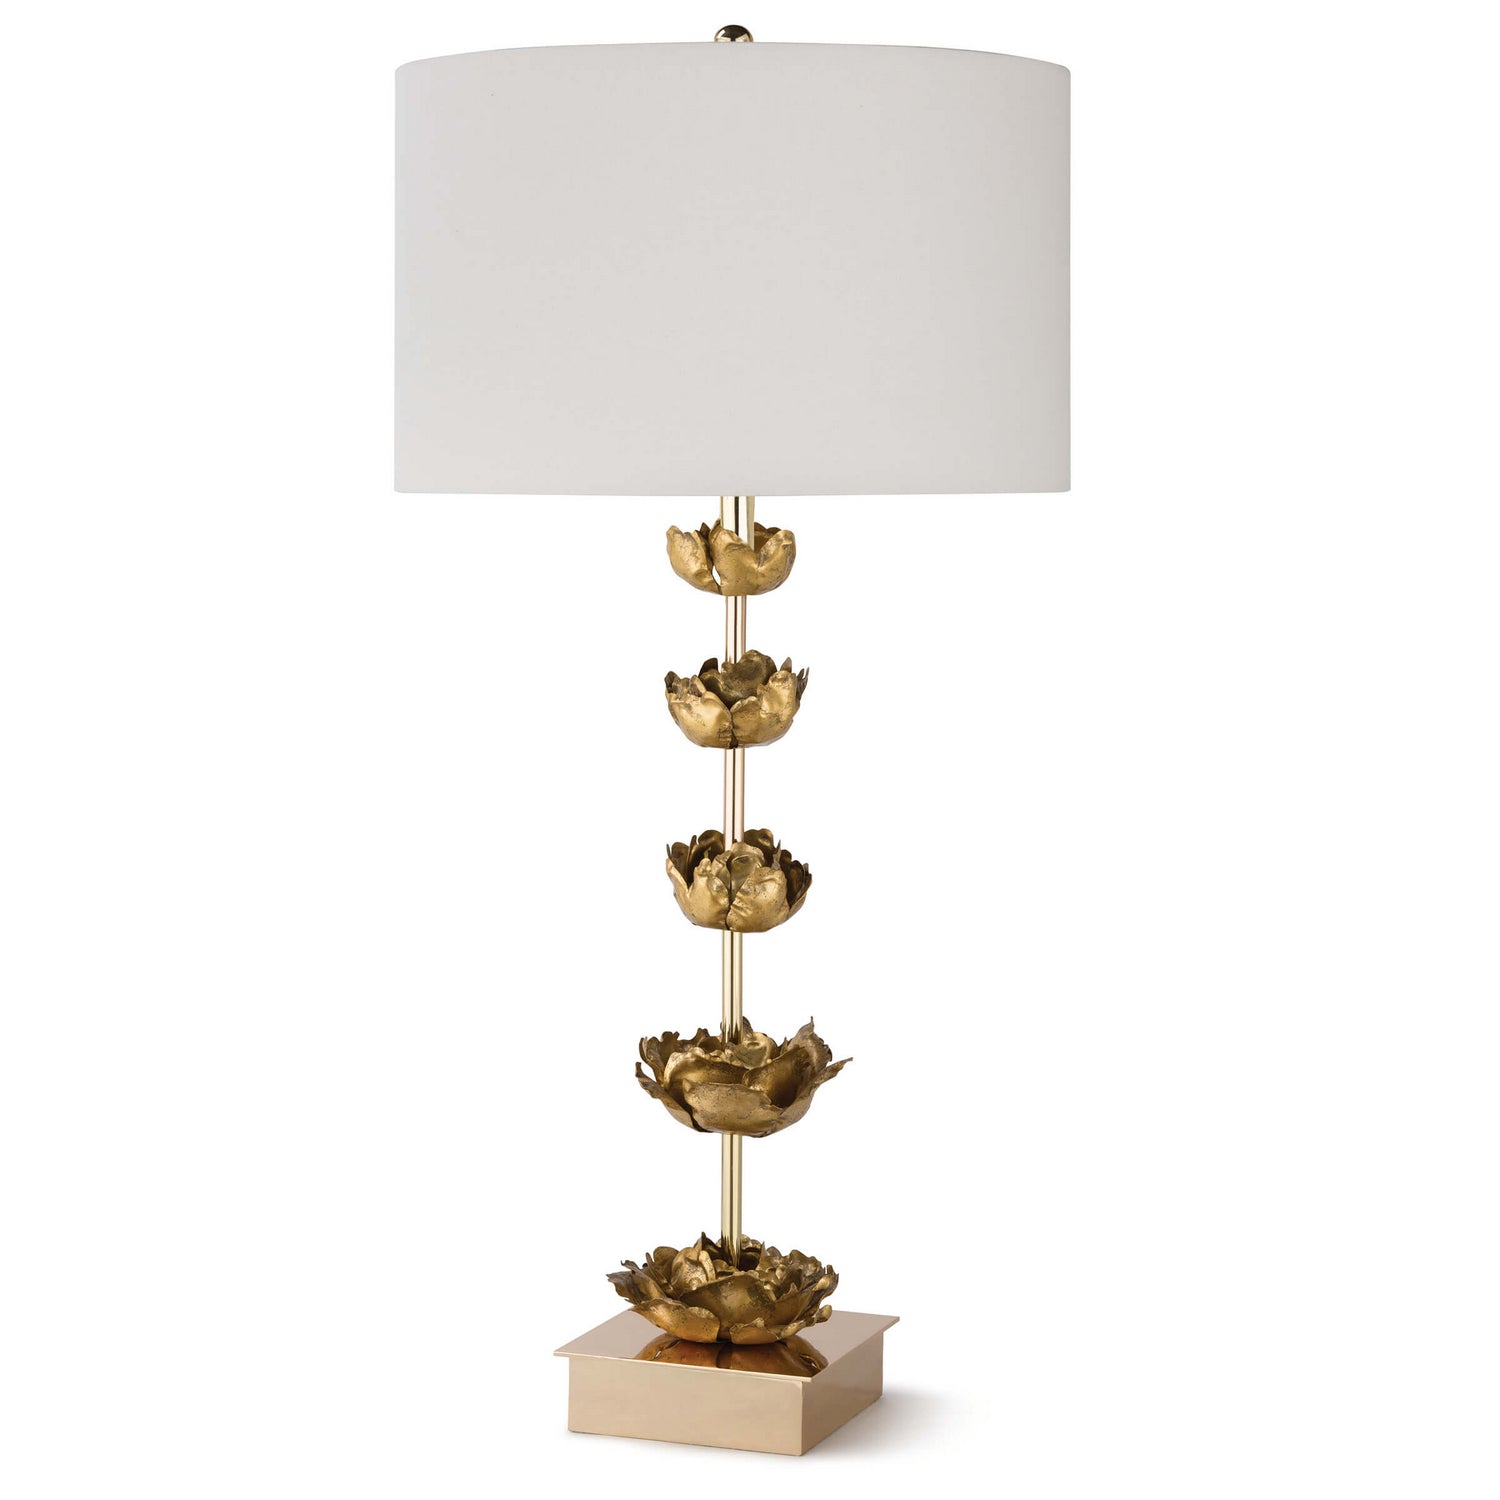 Regina Andrew - 13-1284 - One Light Table Lamp - Adeline - Gold Leaf